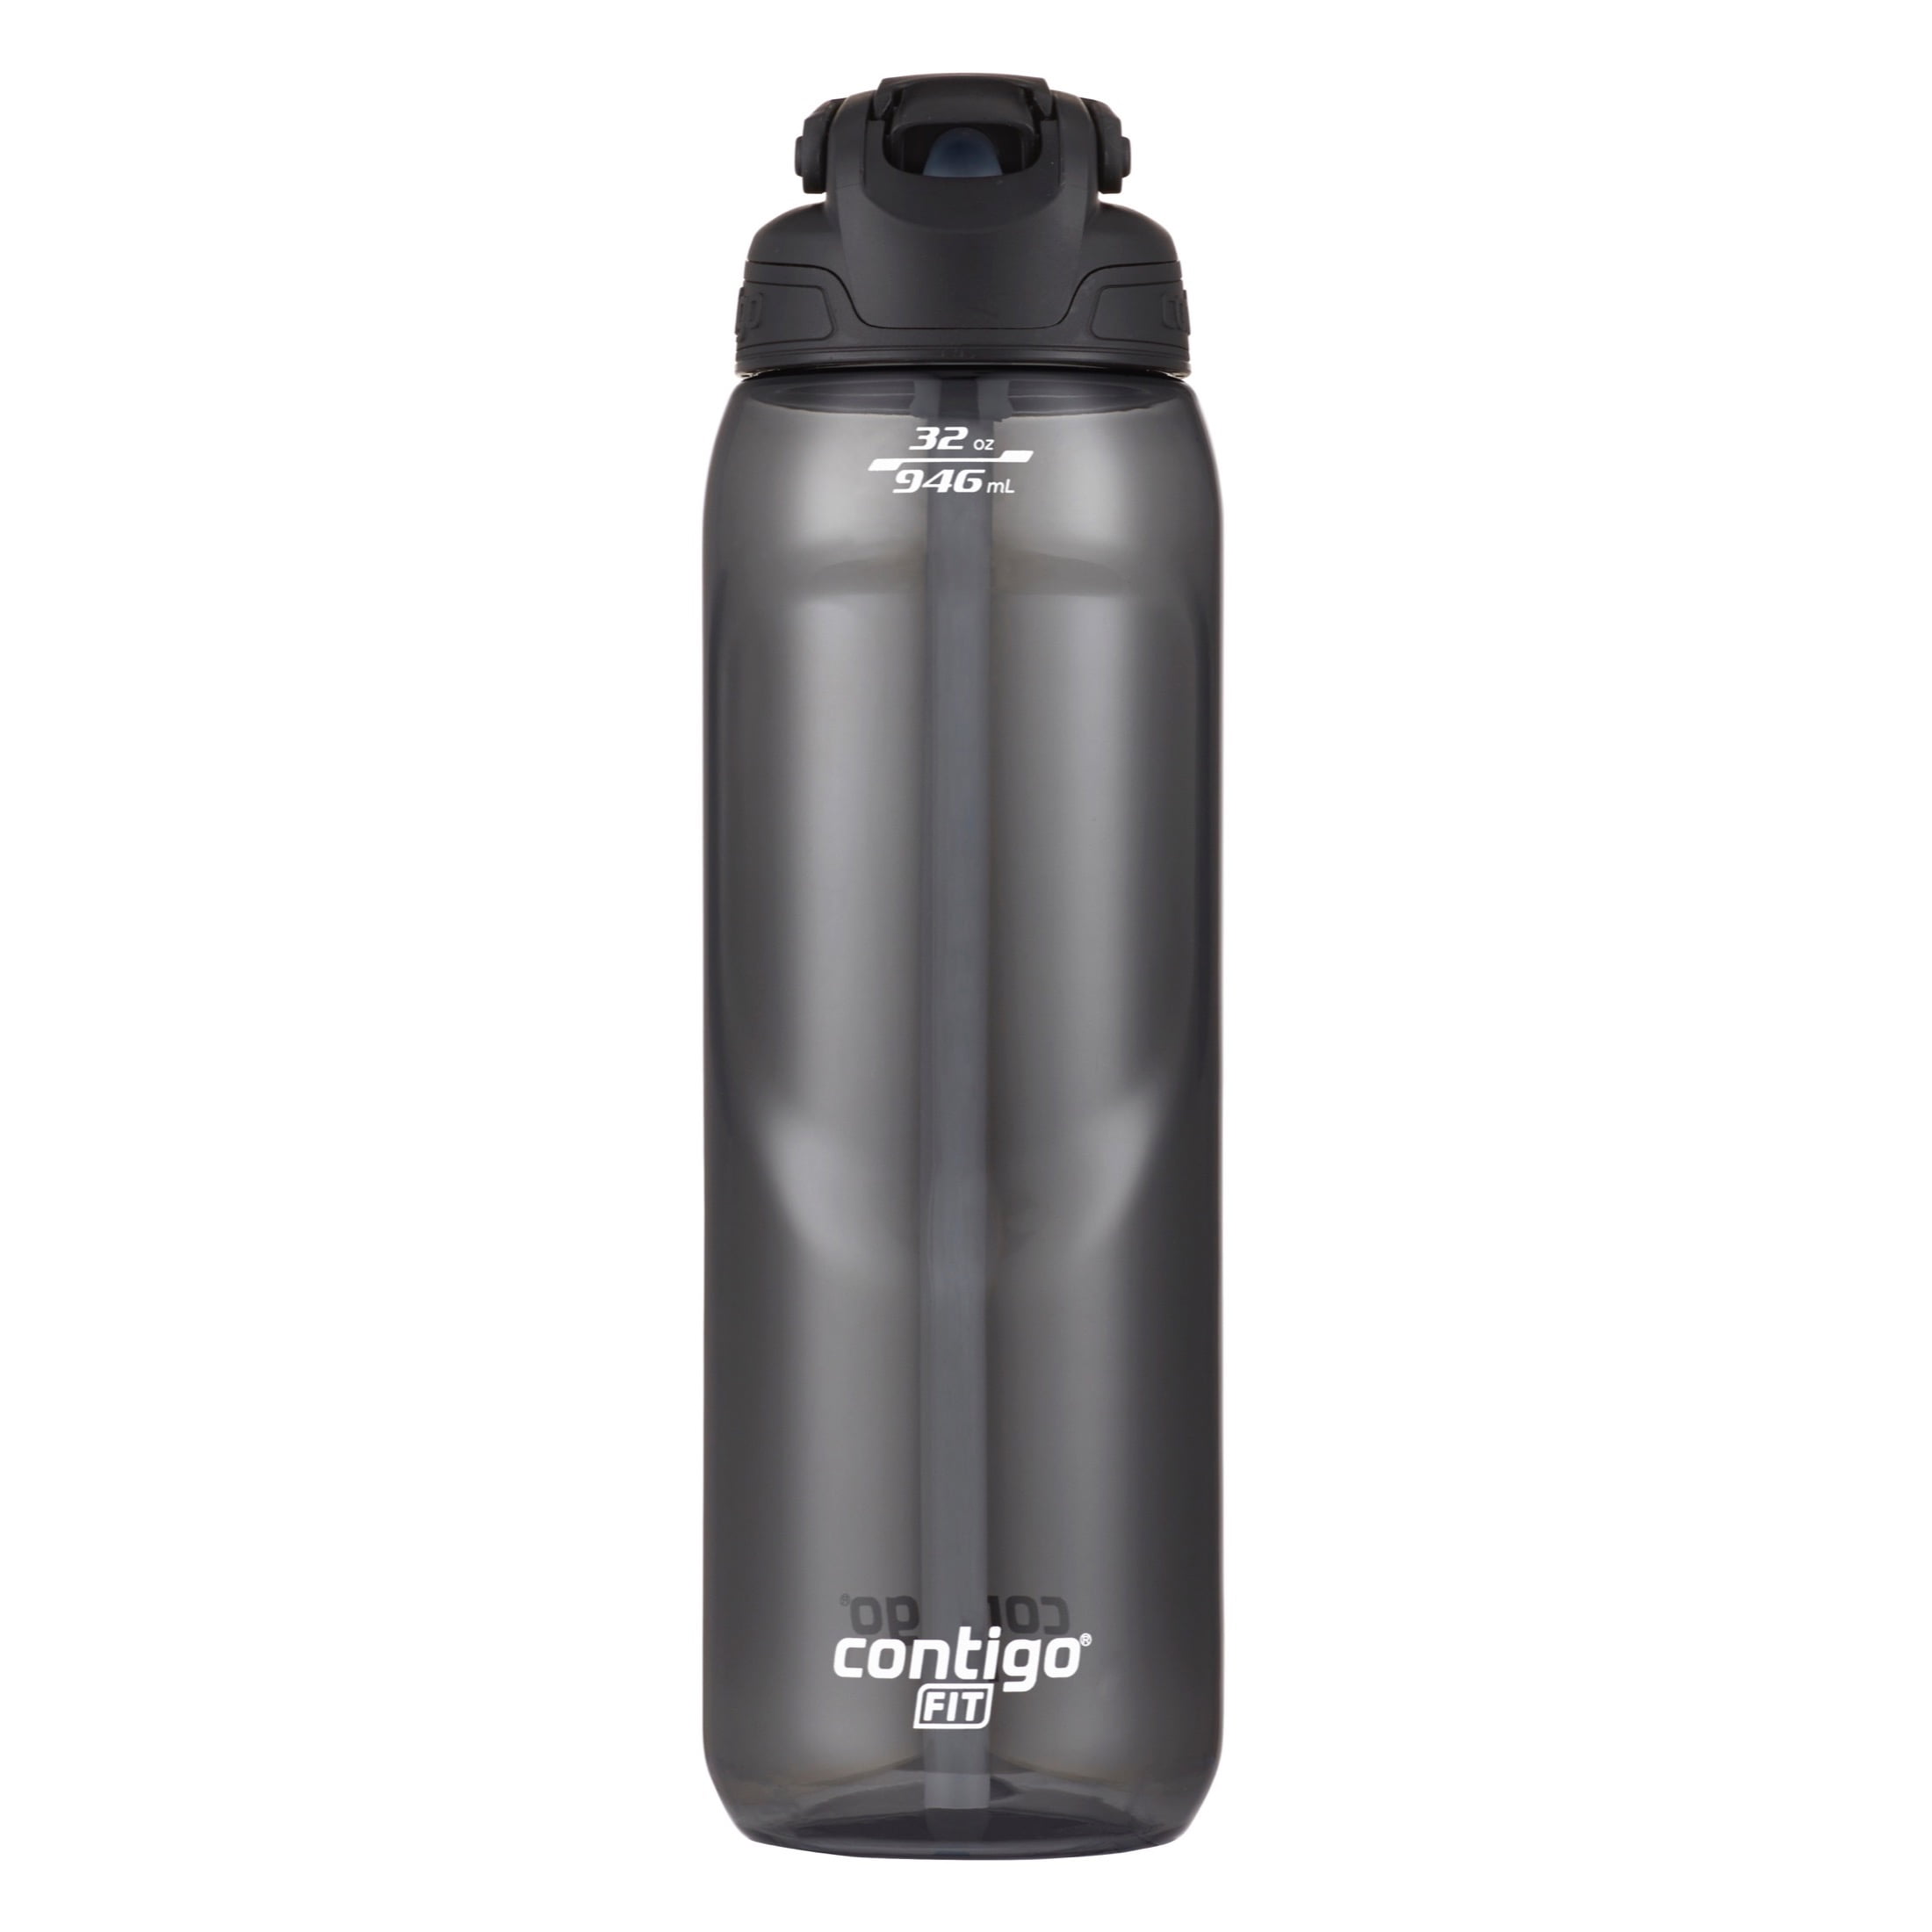 Contigo Fit Autoseal Water Bottle, 32 oz, Surge